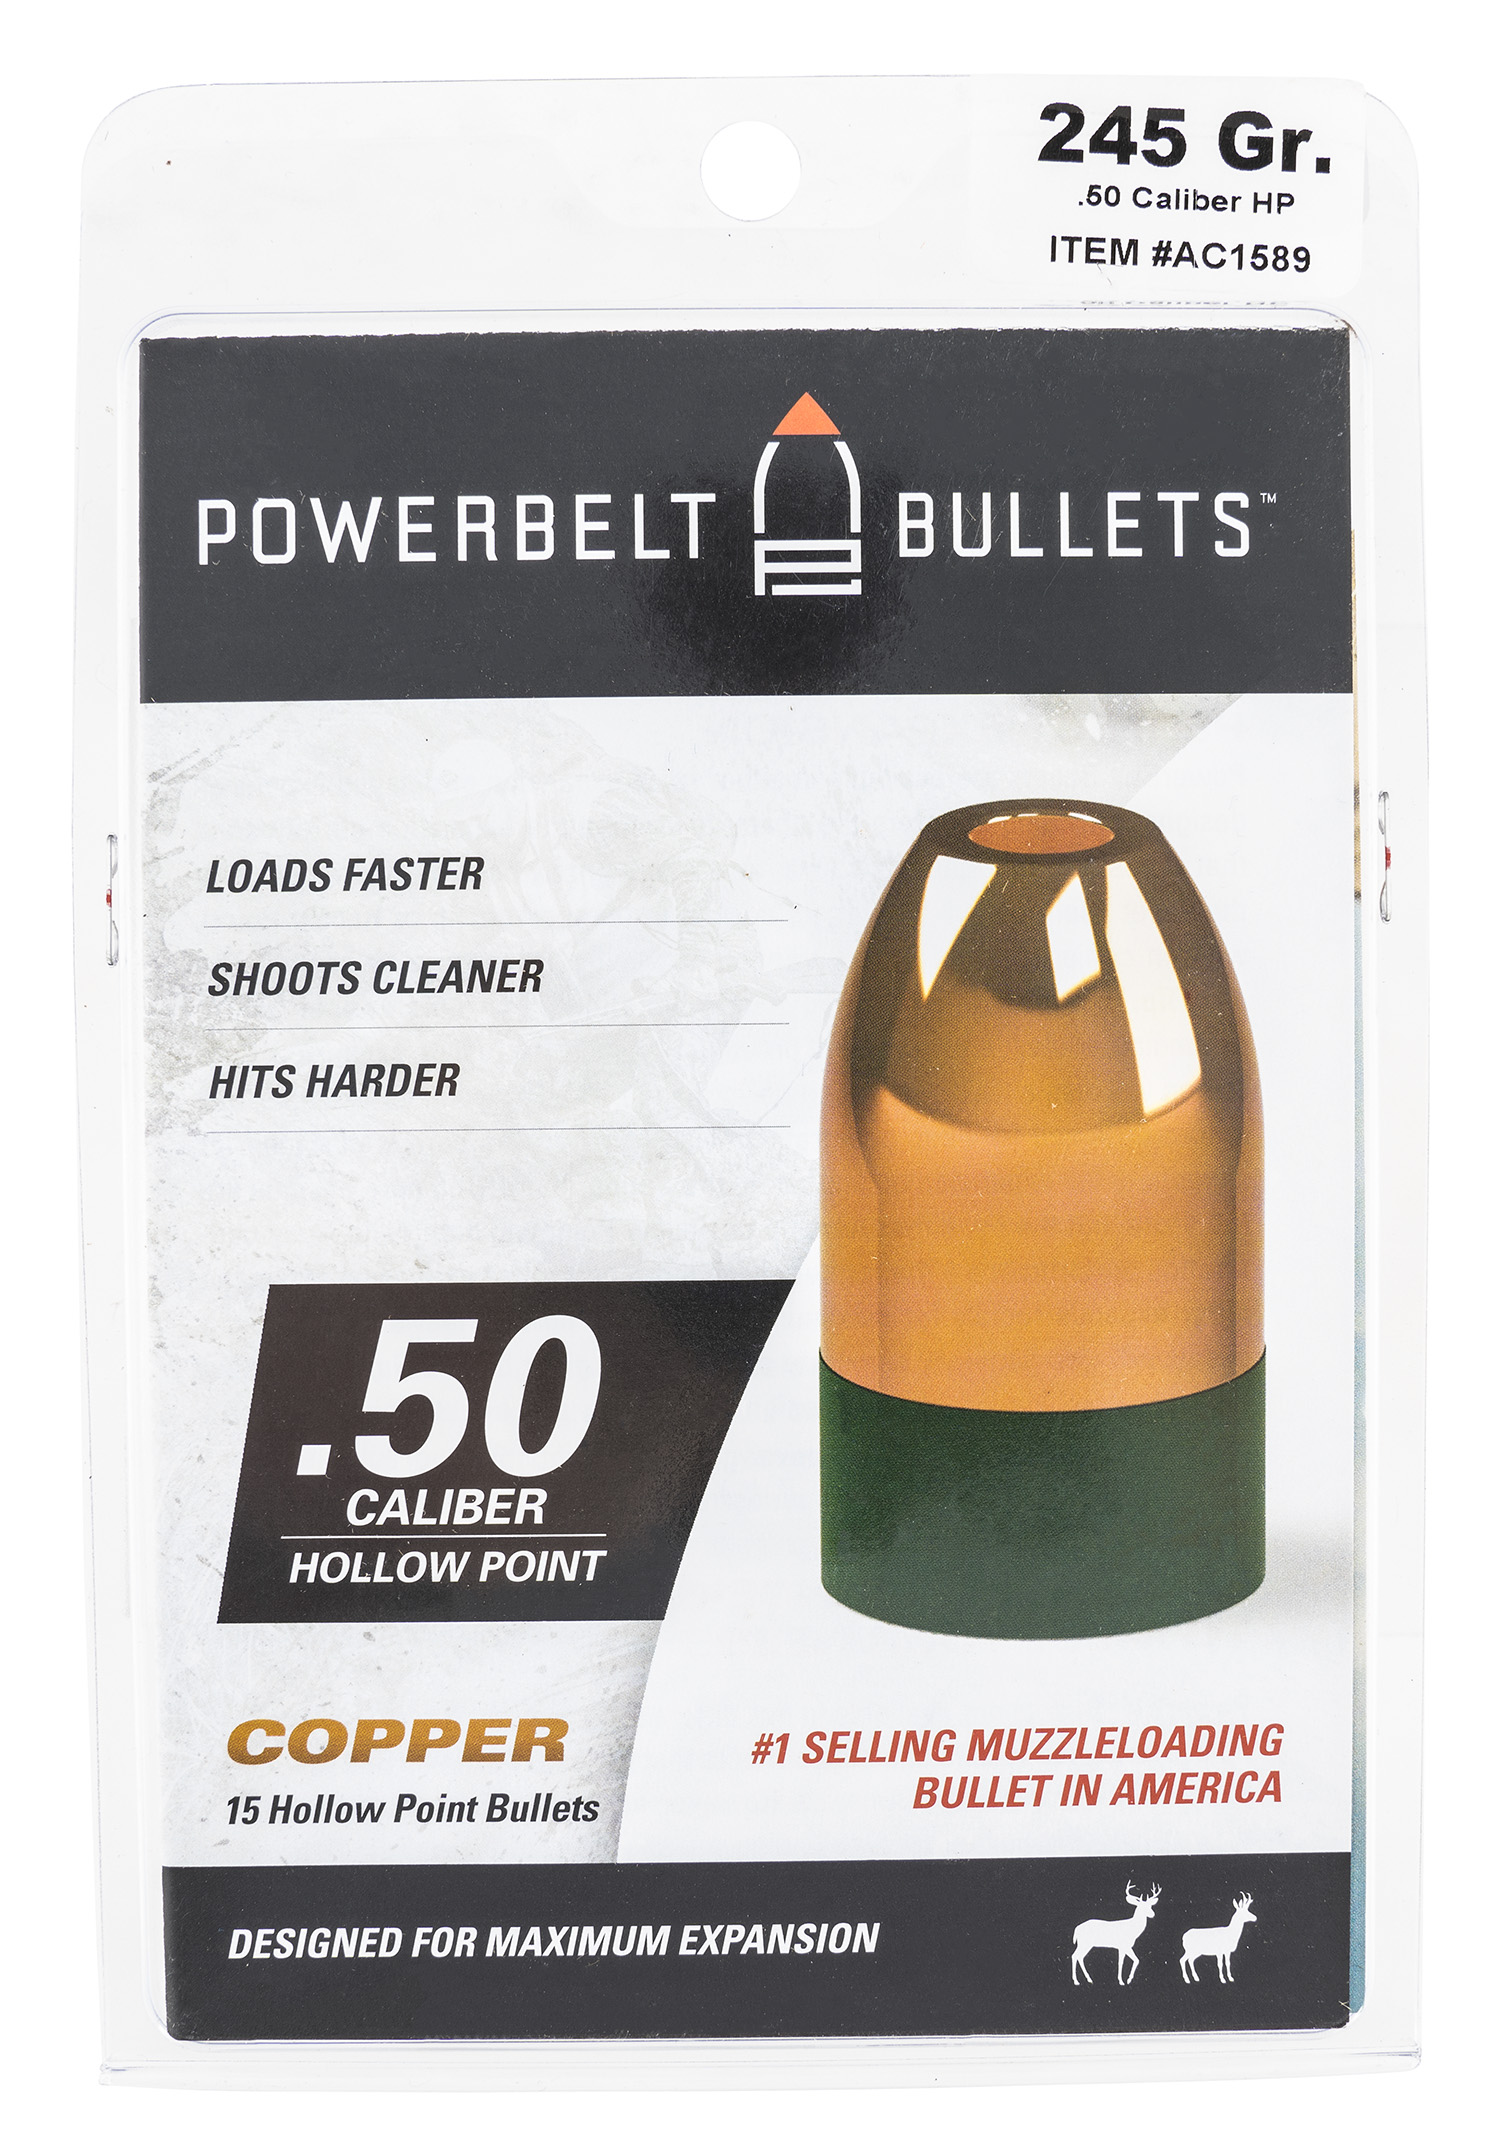 PowerBelt Bullets AC1589 Copper Muzzleloader 50 Cal Hollow Point 245 gr 15rd Box